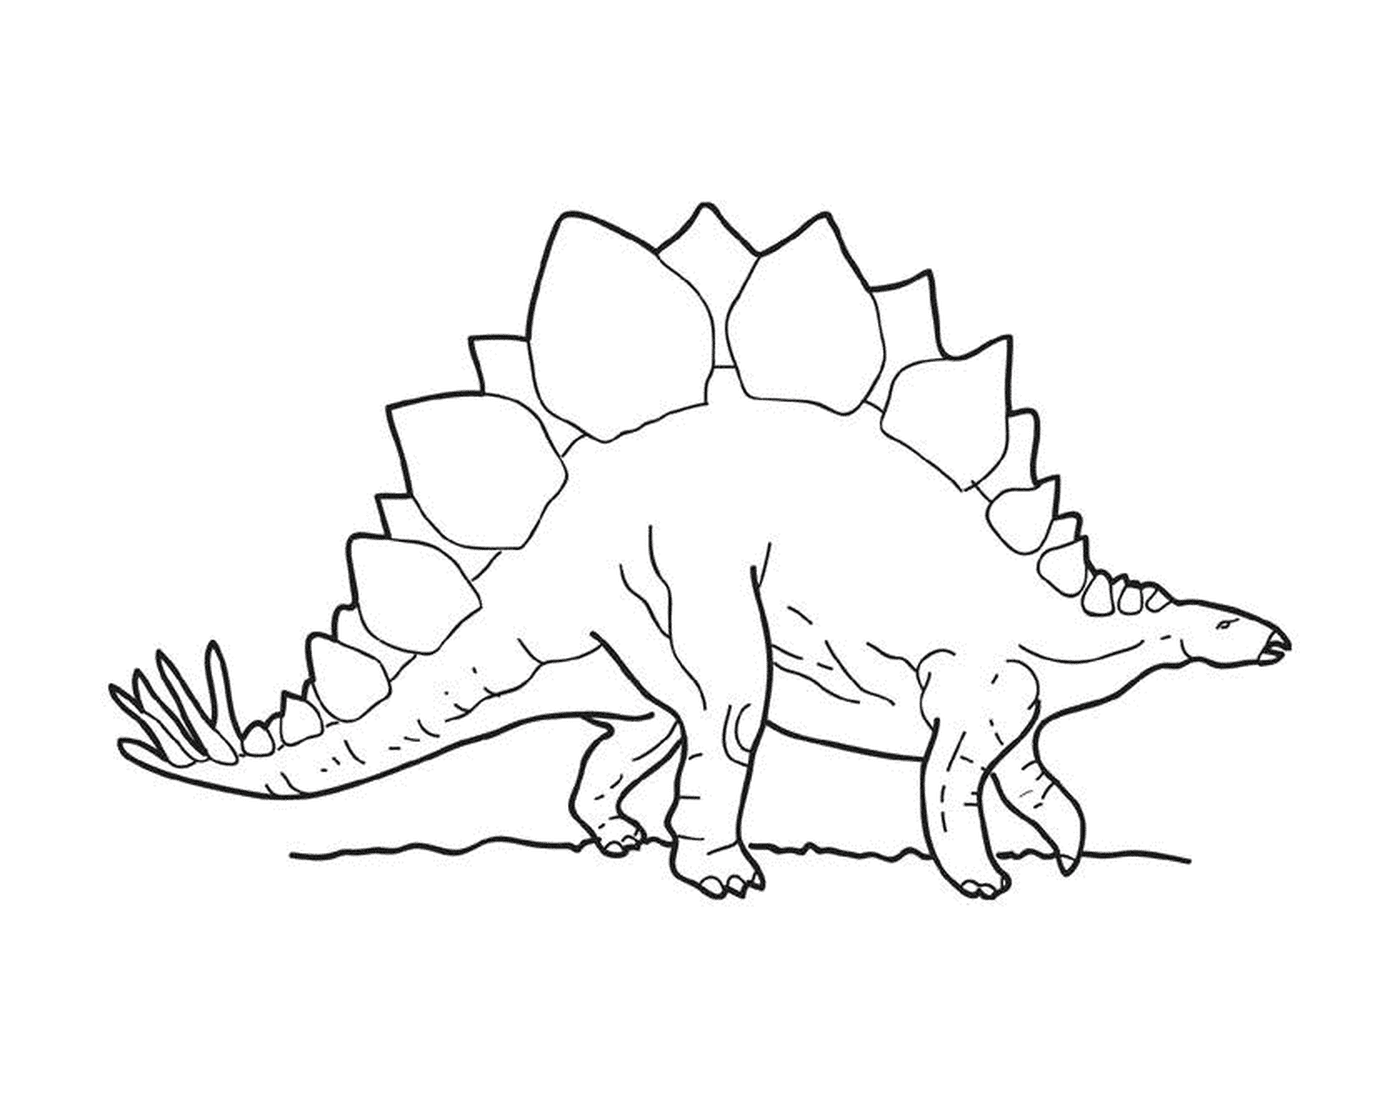  A standing stegosaurus 